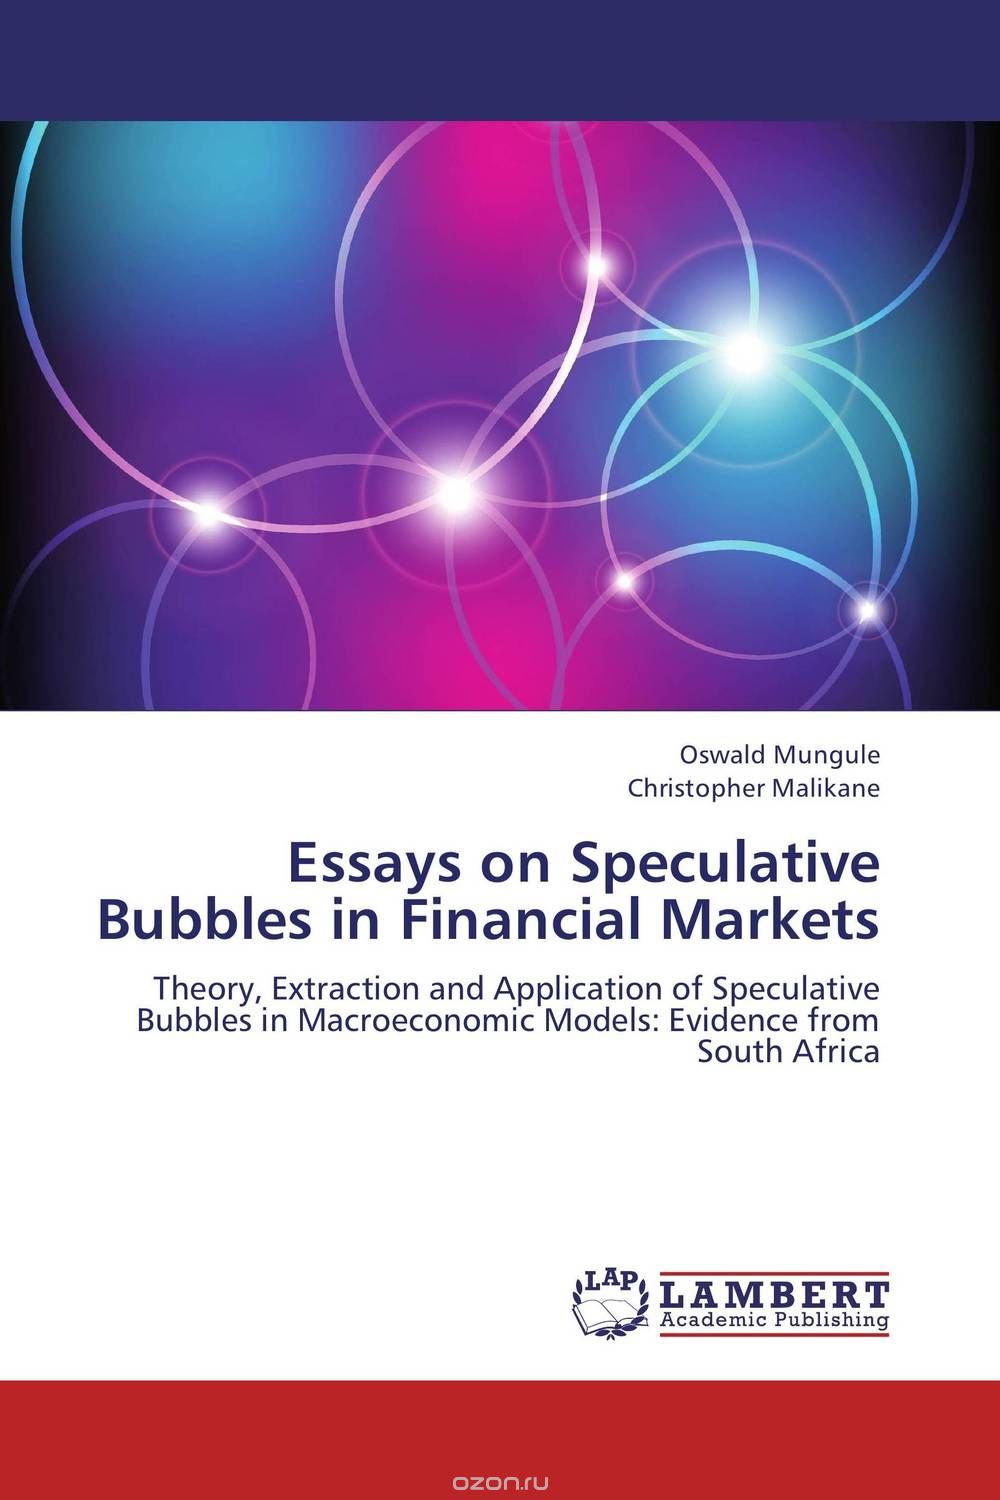 Скачать книгу "Essays on Speculative Bubbles in Financial Markets"